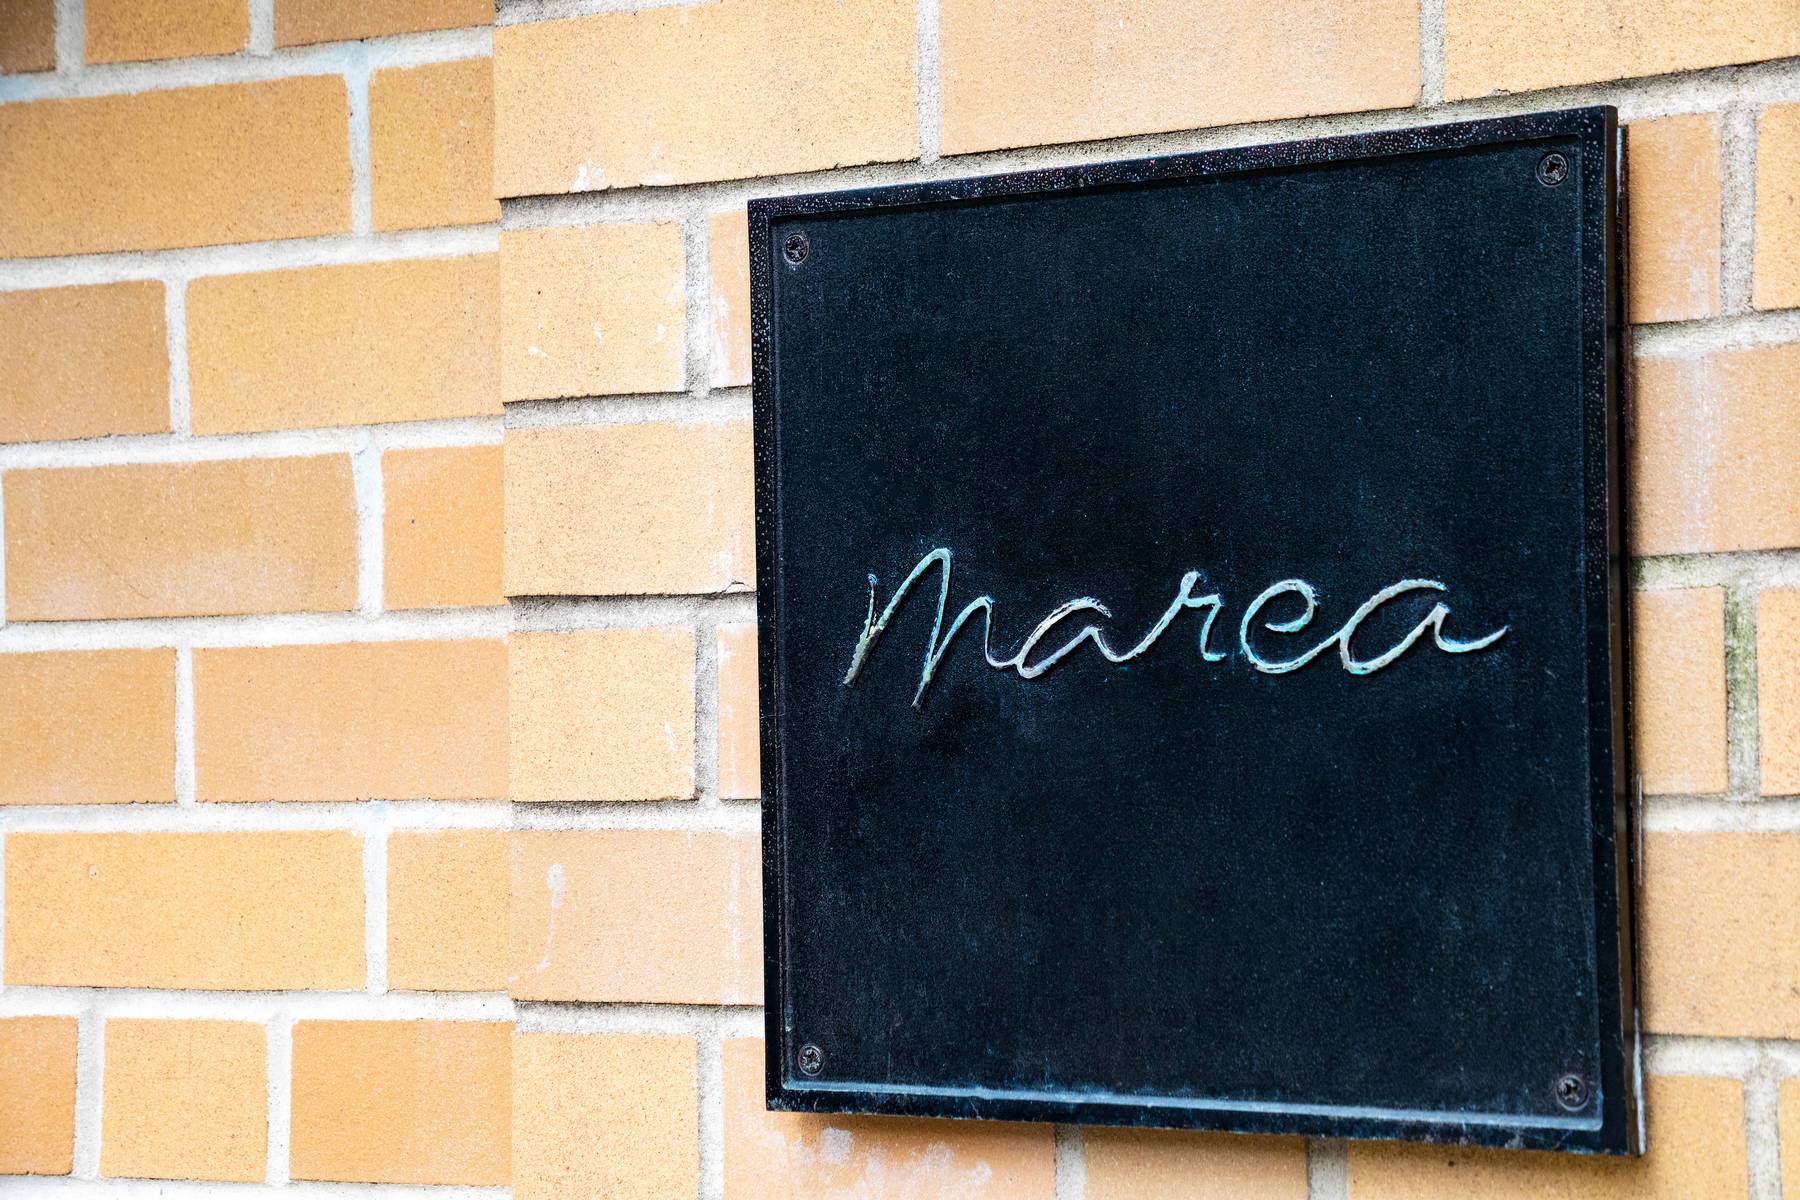 marea metal sign on brick building detail